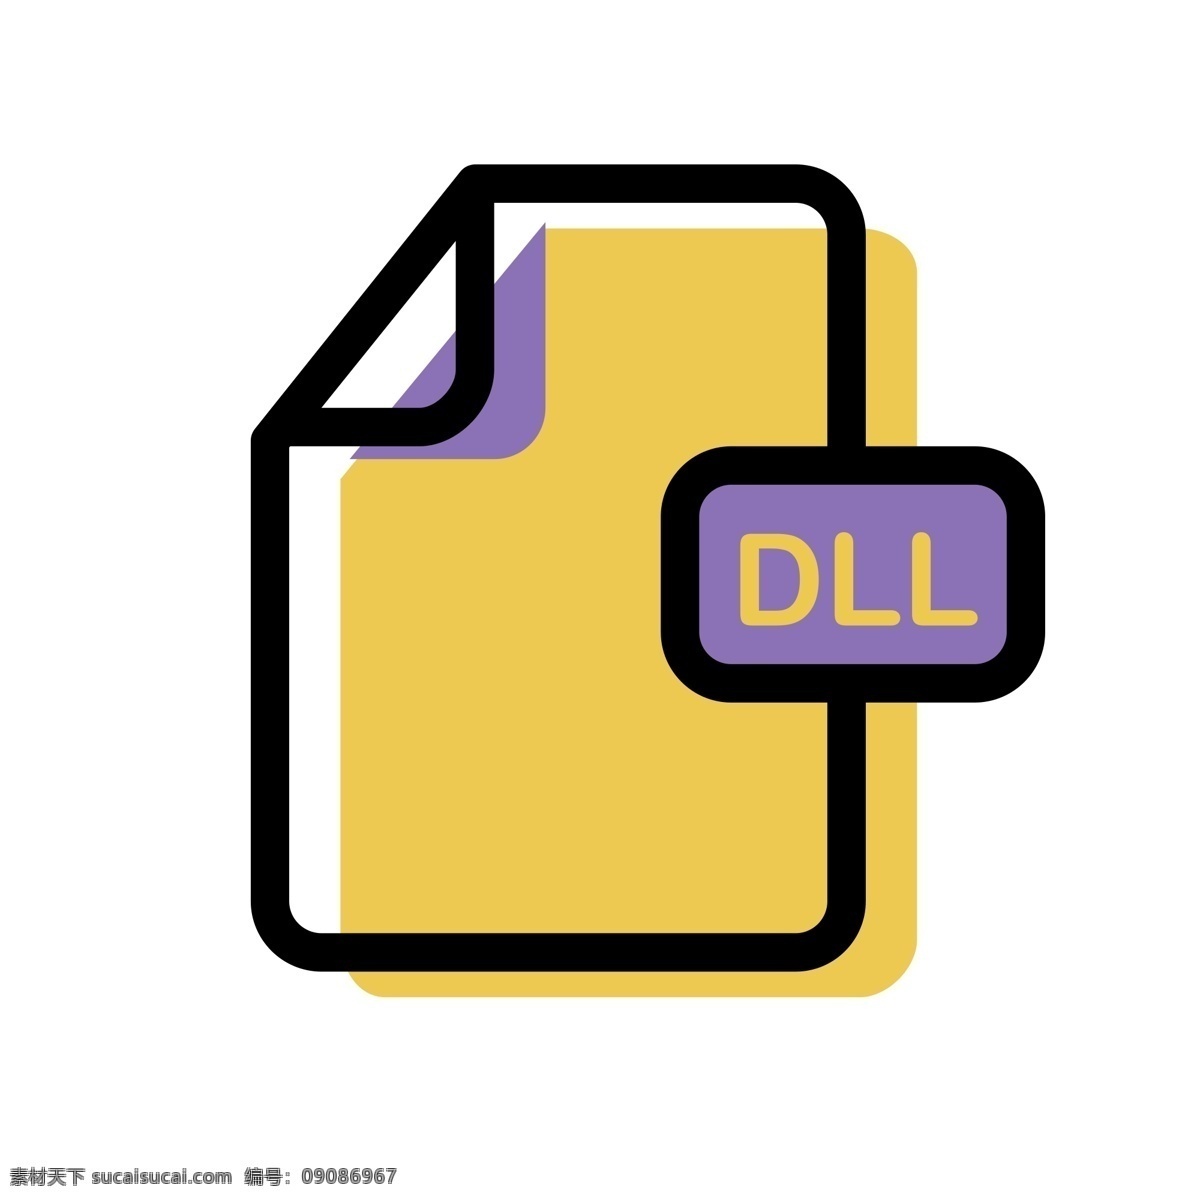 dll 文件 格式 图标 免 抠 图 dll格式 软件图标 格式文件 ui应用图标 电脑文件图标 软件格式 卡通图案 卡通插画